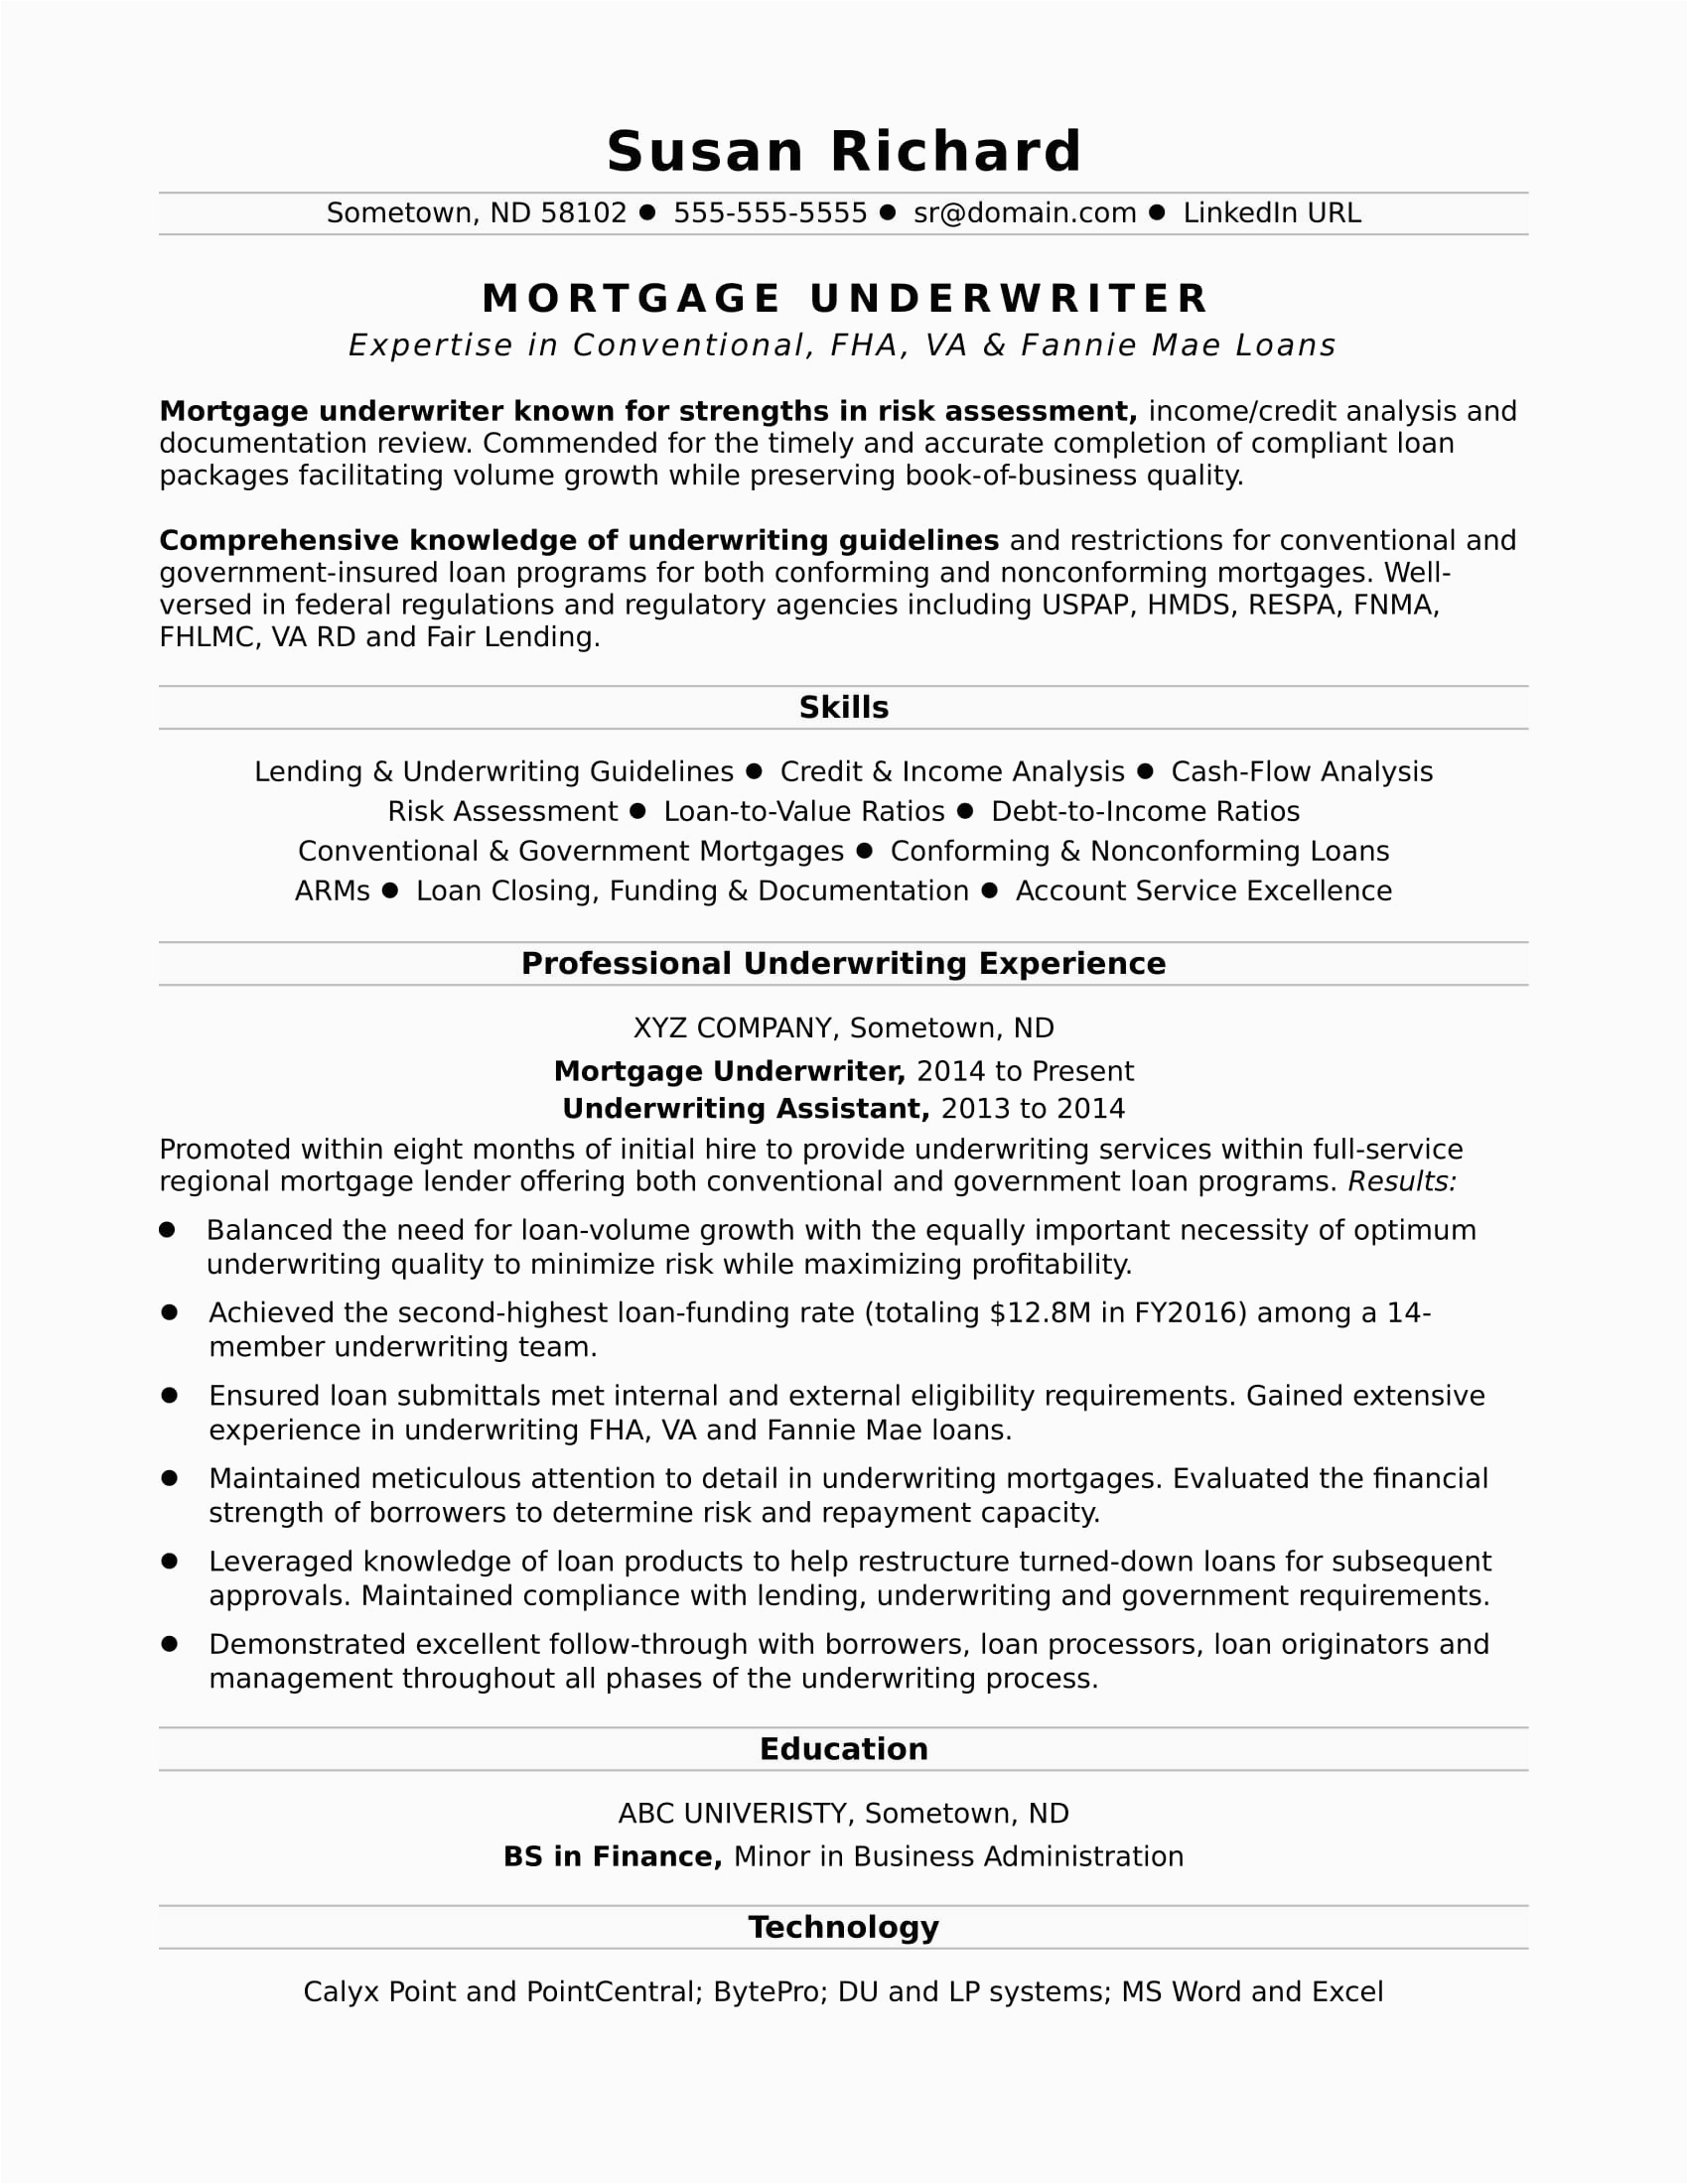 sample resume mortgage underwriter